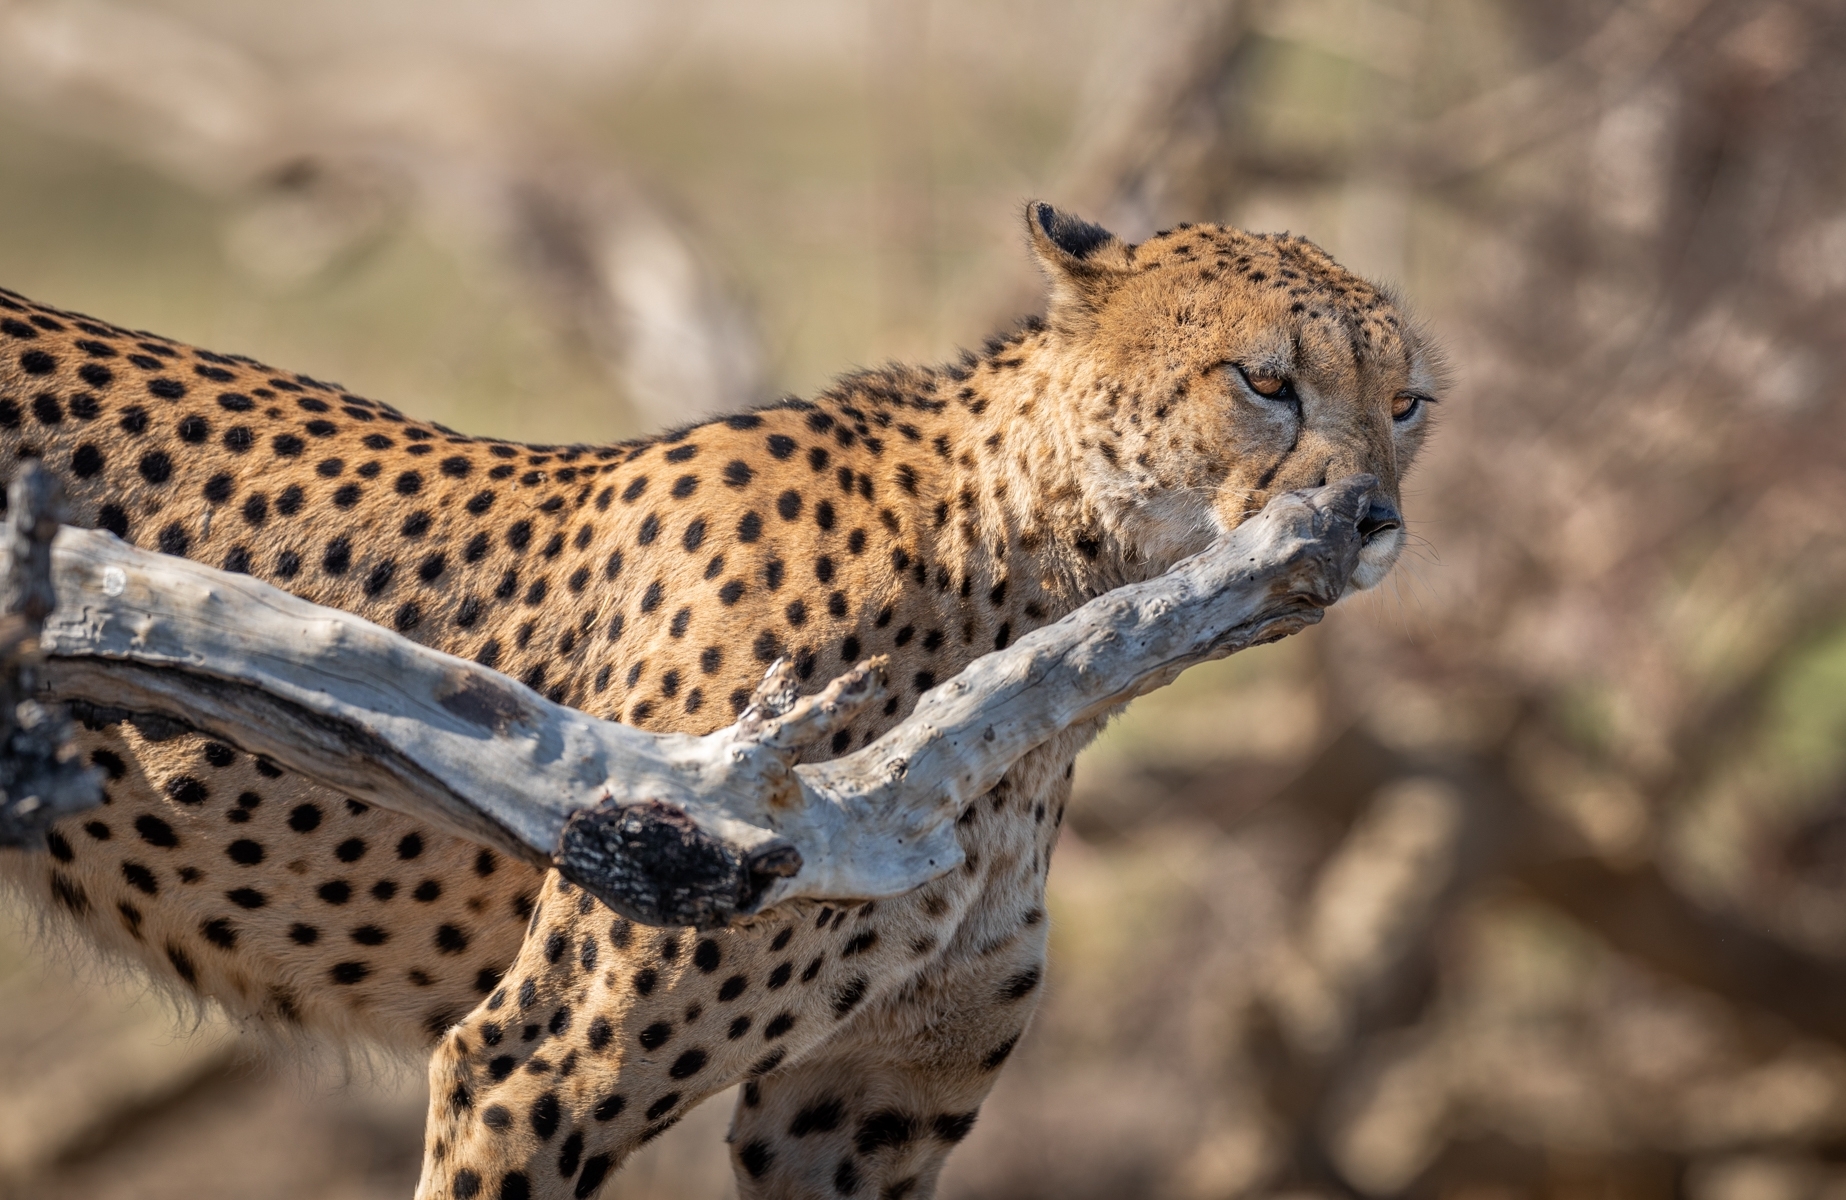 010 Sniff Test - Okavango Cheetah